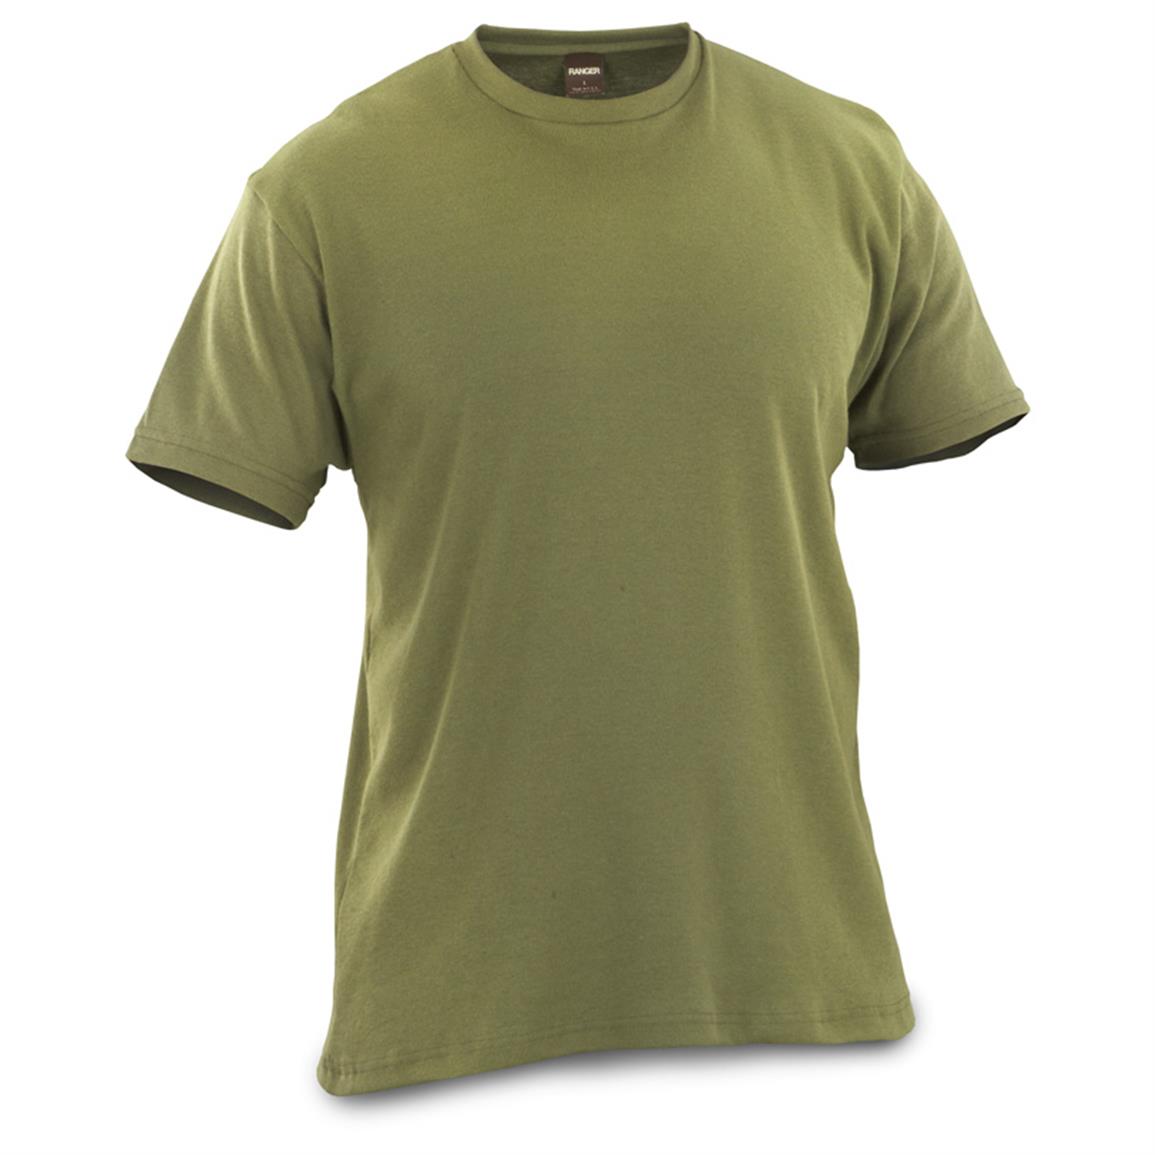 Bell Ranger Olive Drab Rib T-shirt - 607538, T-Shirts at Sportsman's Guide